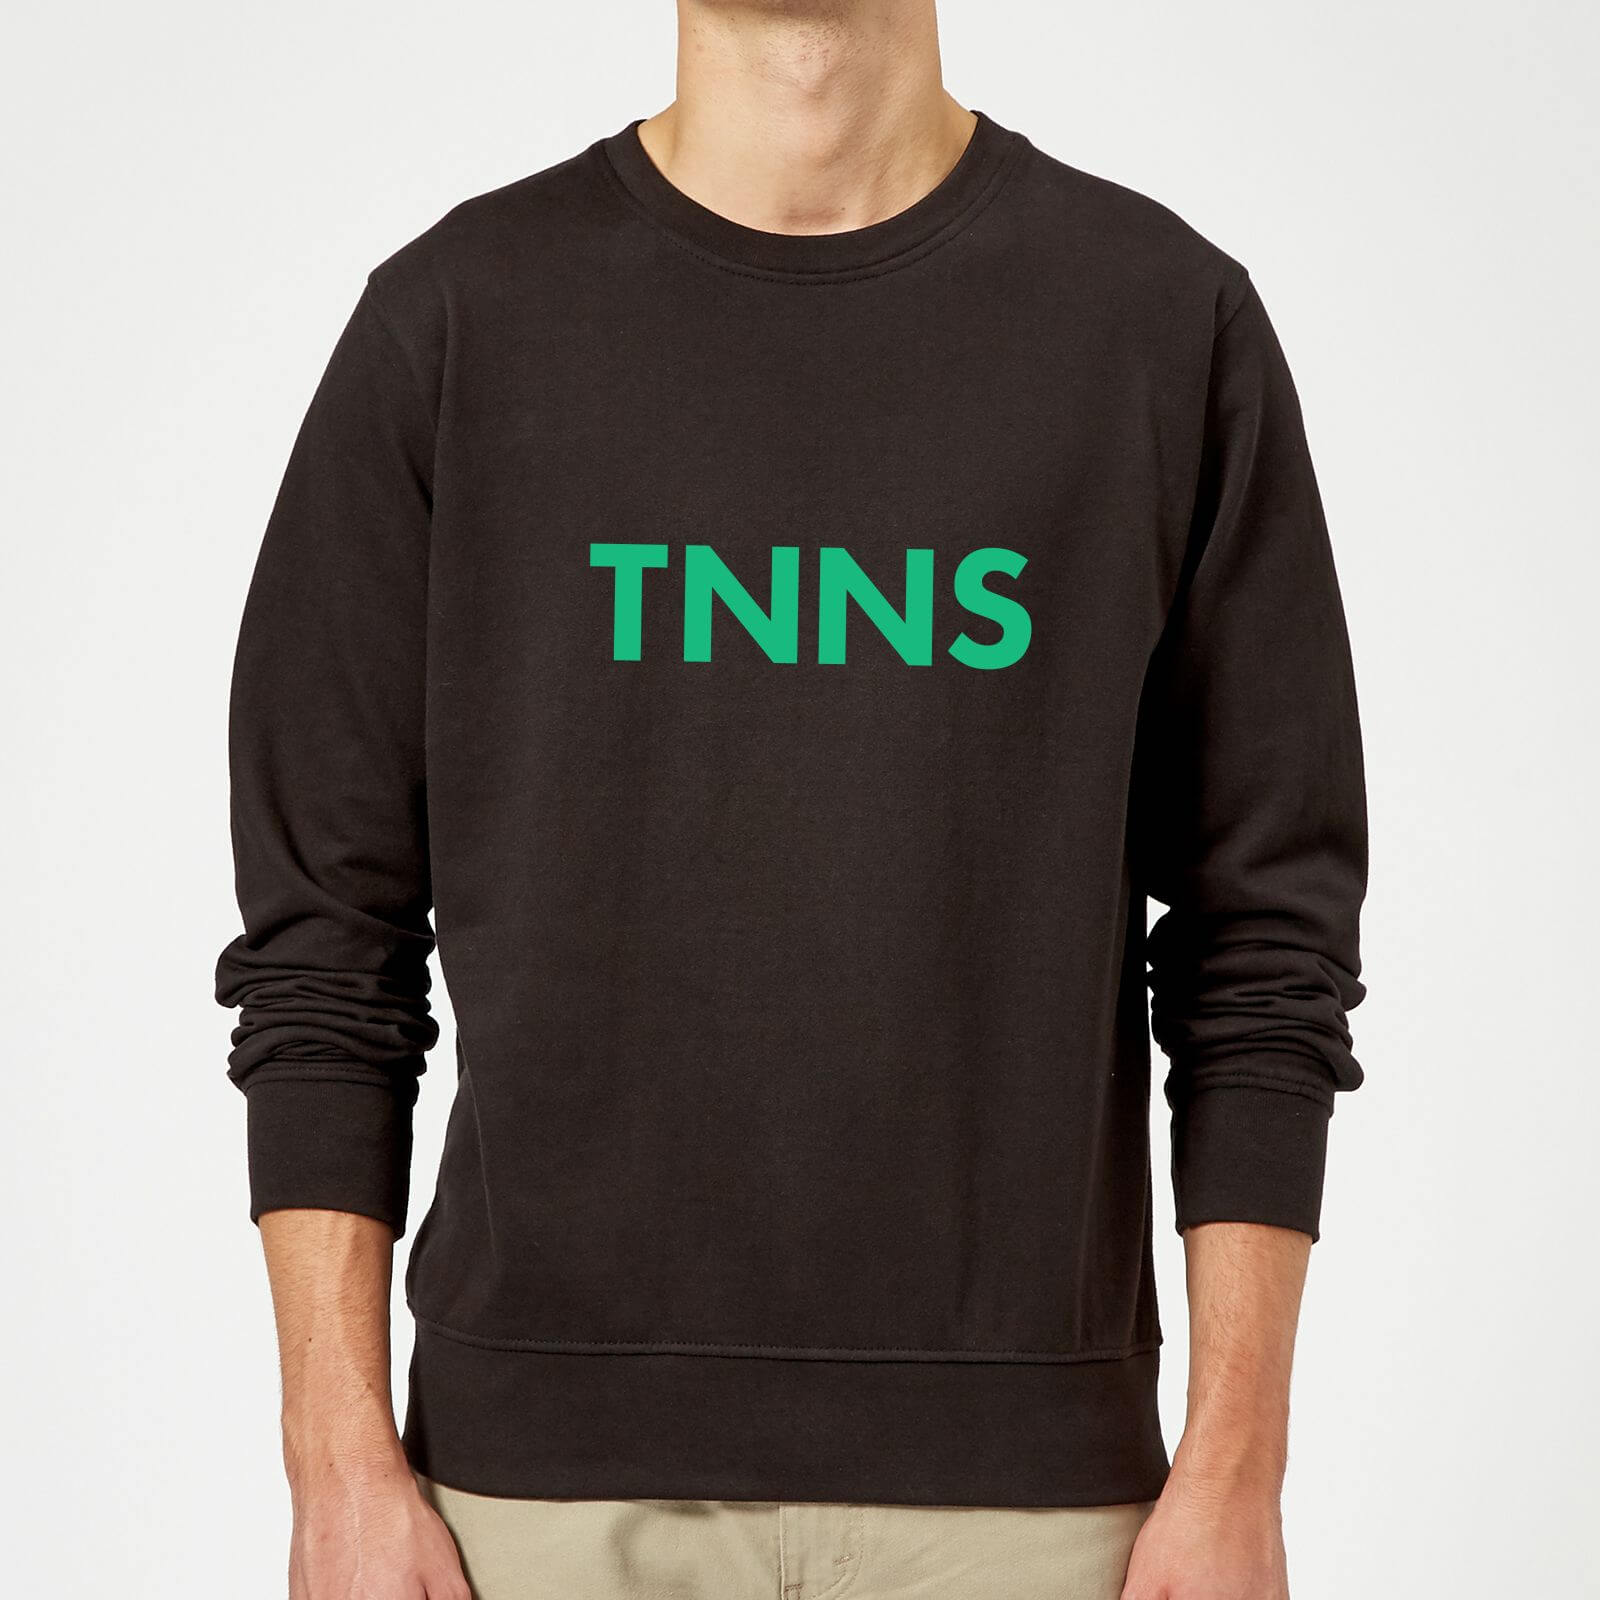 Tnns Sweatshirt - Black - S - Black